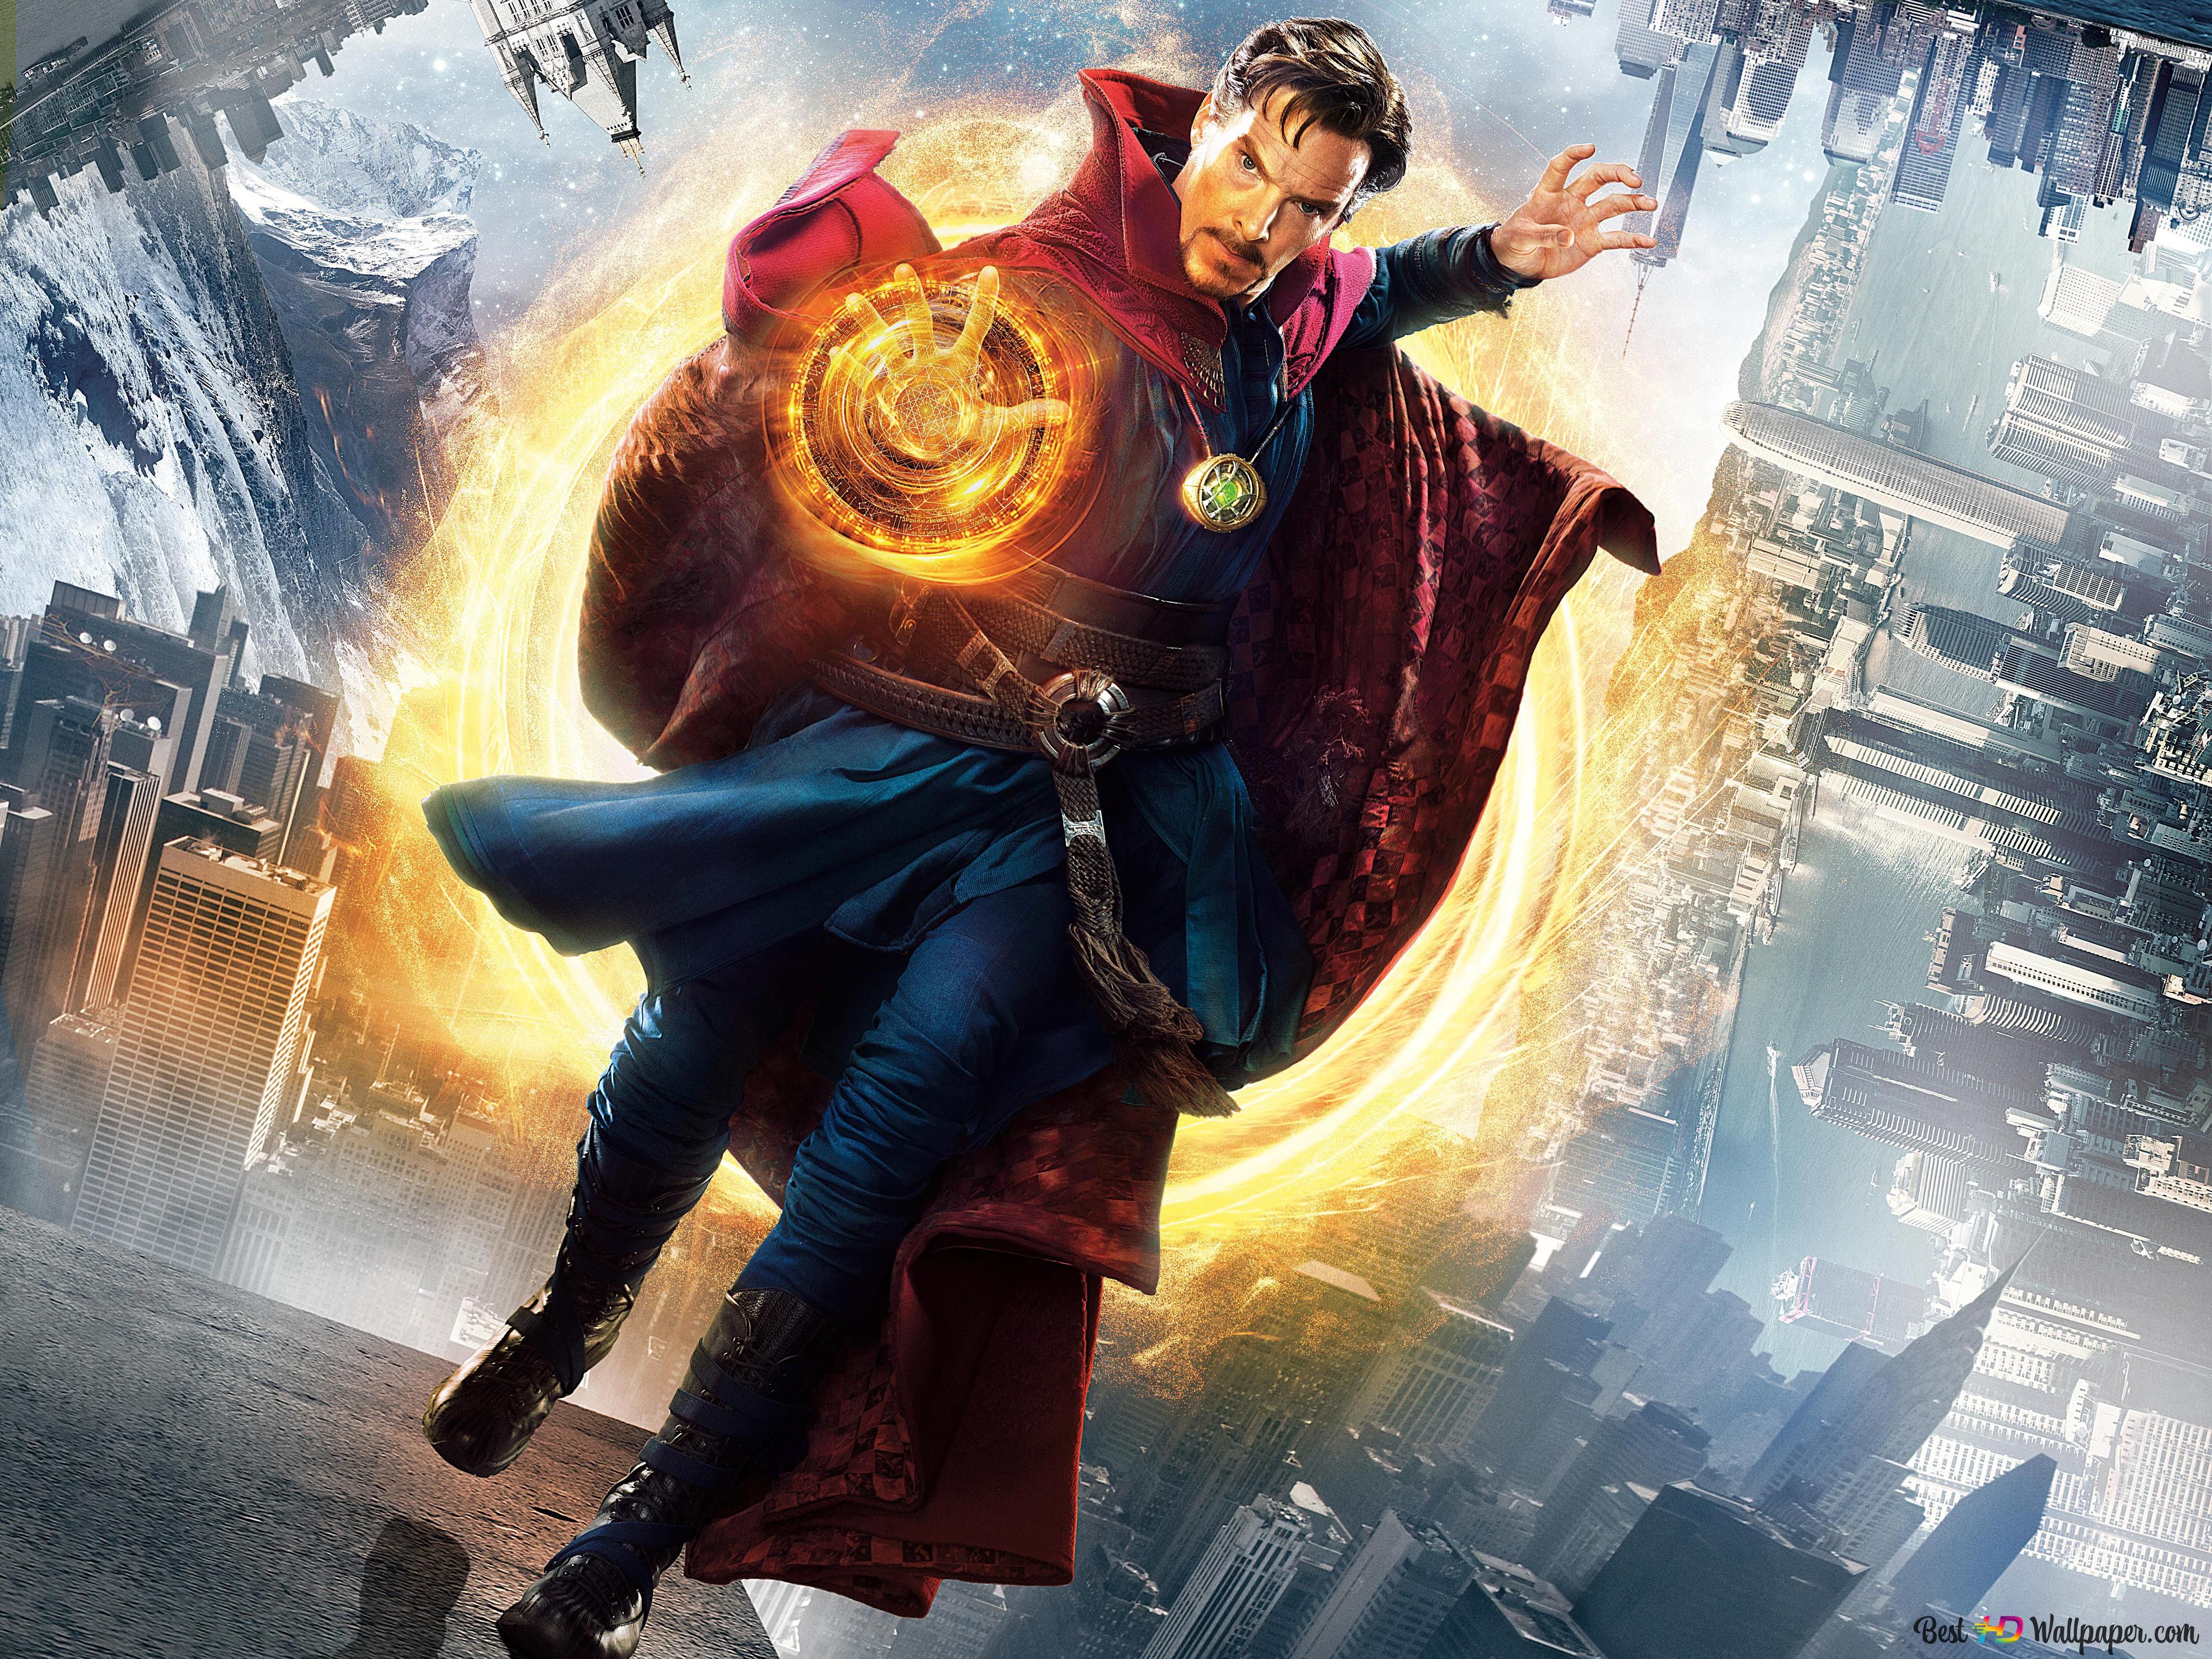 Marvel ics character doctor strange movie series superhero cape image k wallpaper download